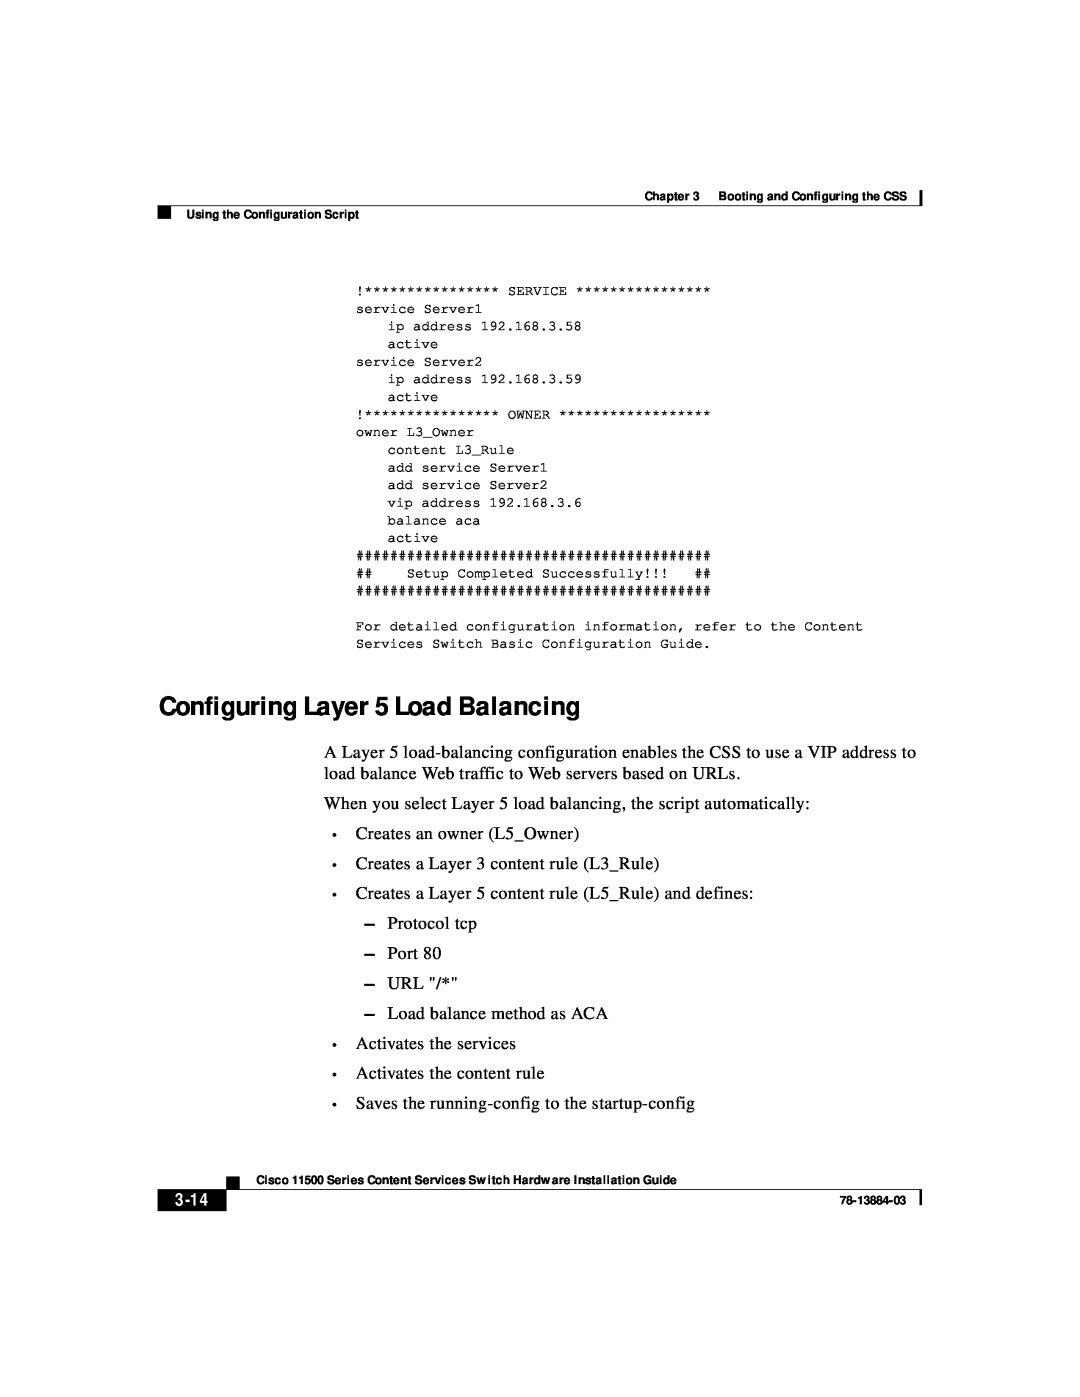 Cisco Systems 11500 Series manual Configuring Layer 5 Load Balancing, 3-14 